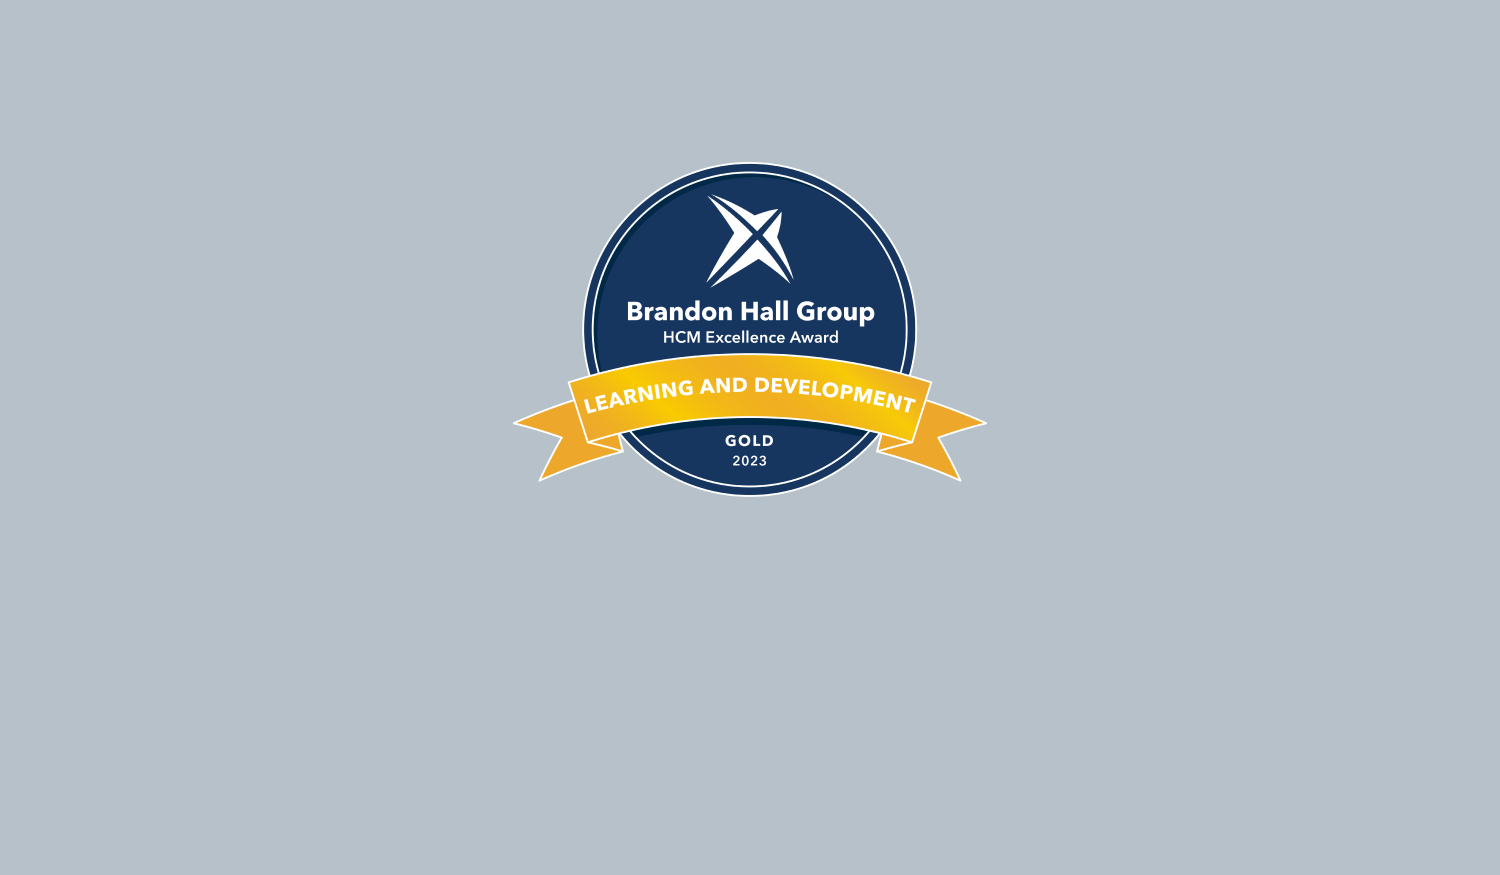 oxfordsm wins a brandon hall group gold award